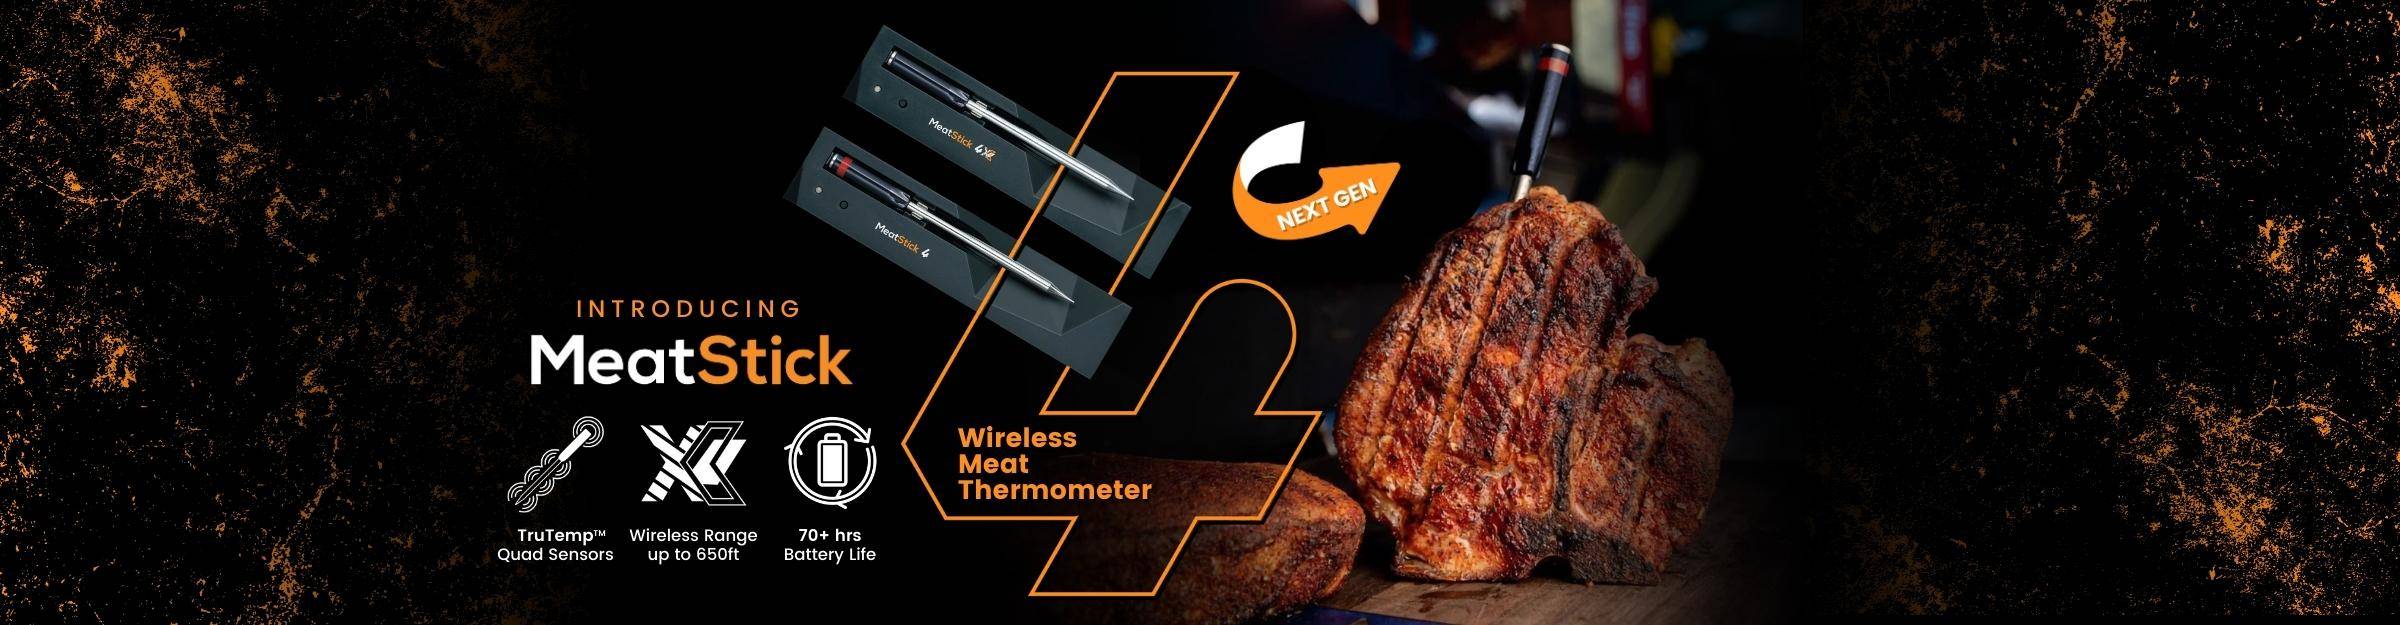 Introducing MeatStick 4 Next Gen Quad Sensors Wireless Meat Thermometer